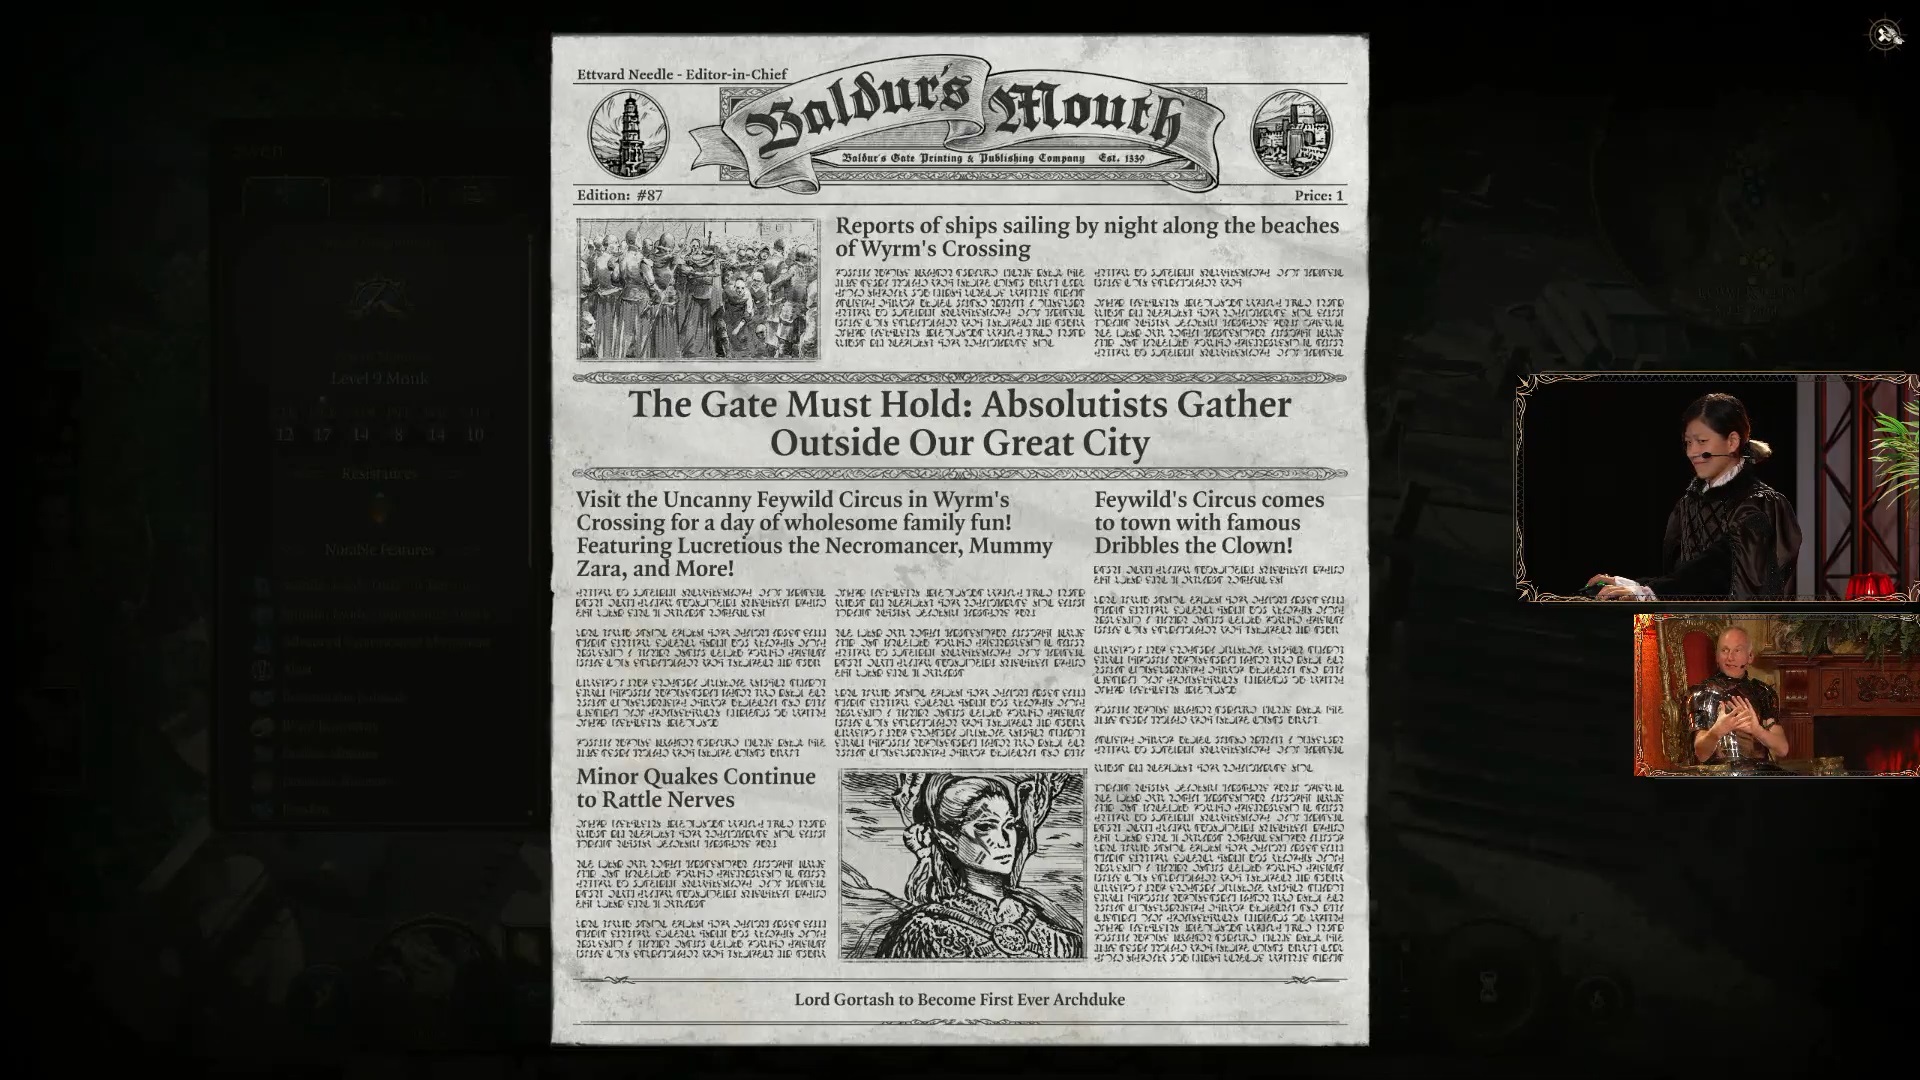 Baldur's Gate oyun içi gazete, "Baldur'un Ağzı"